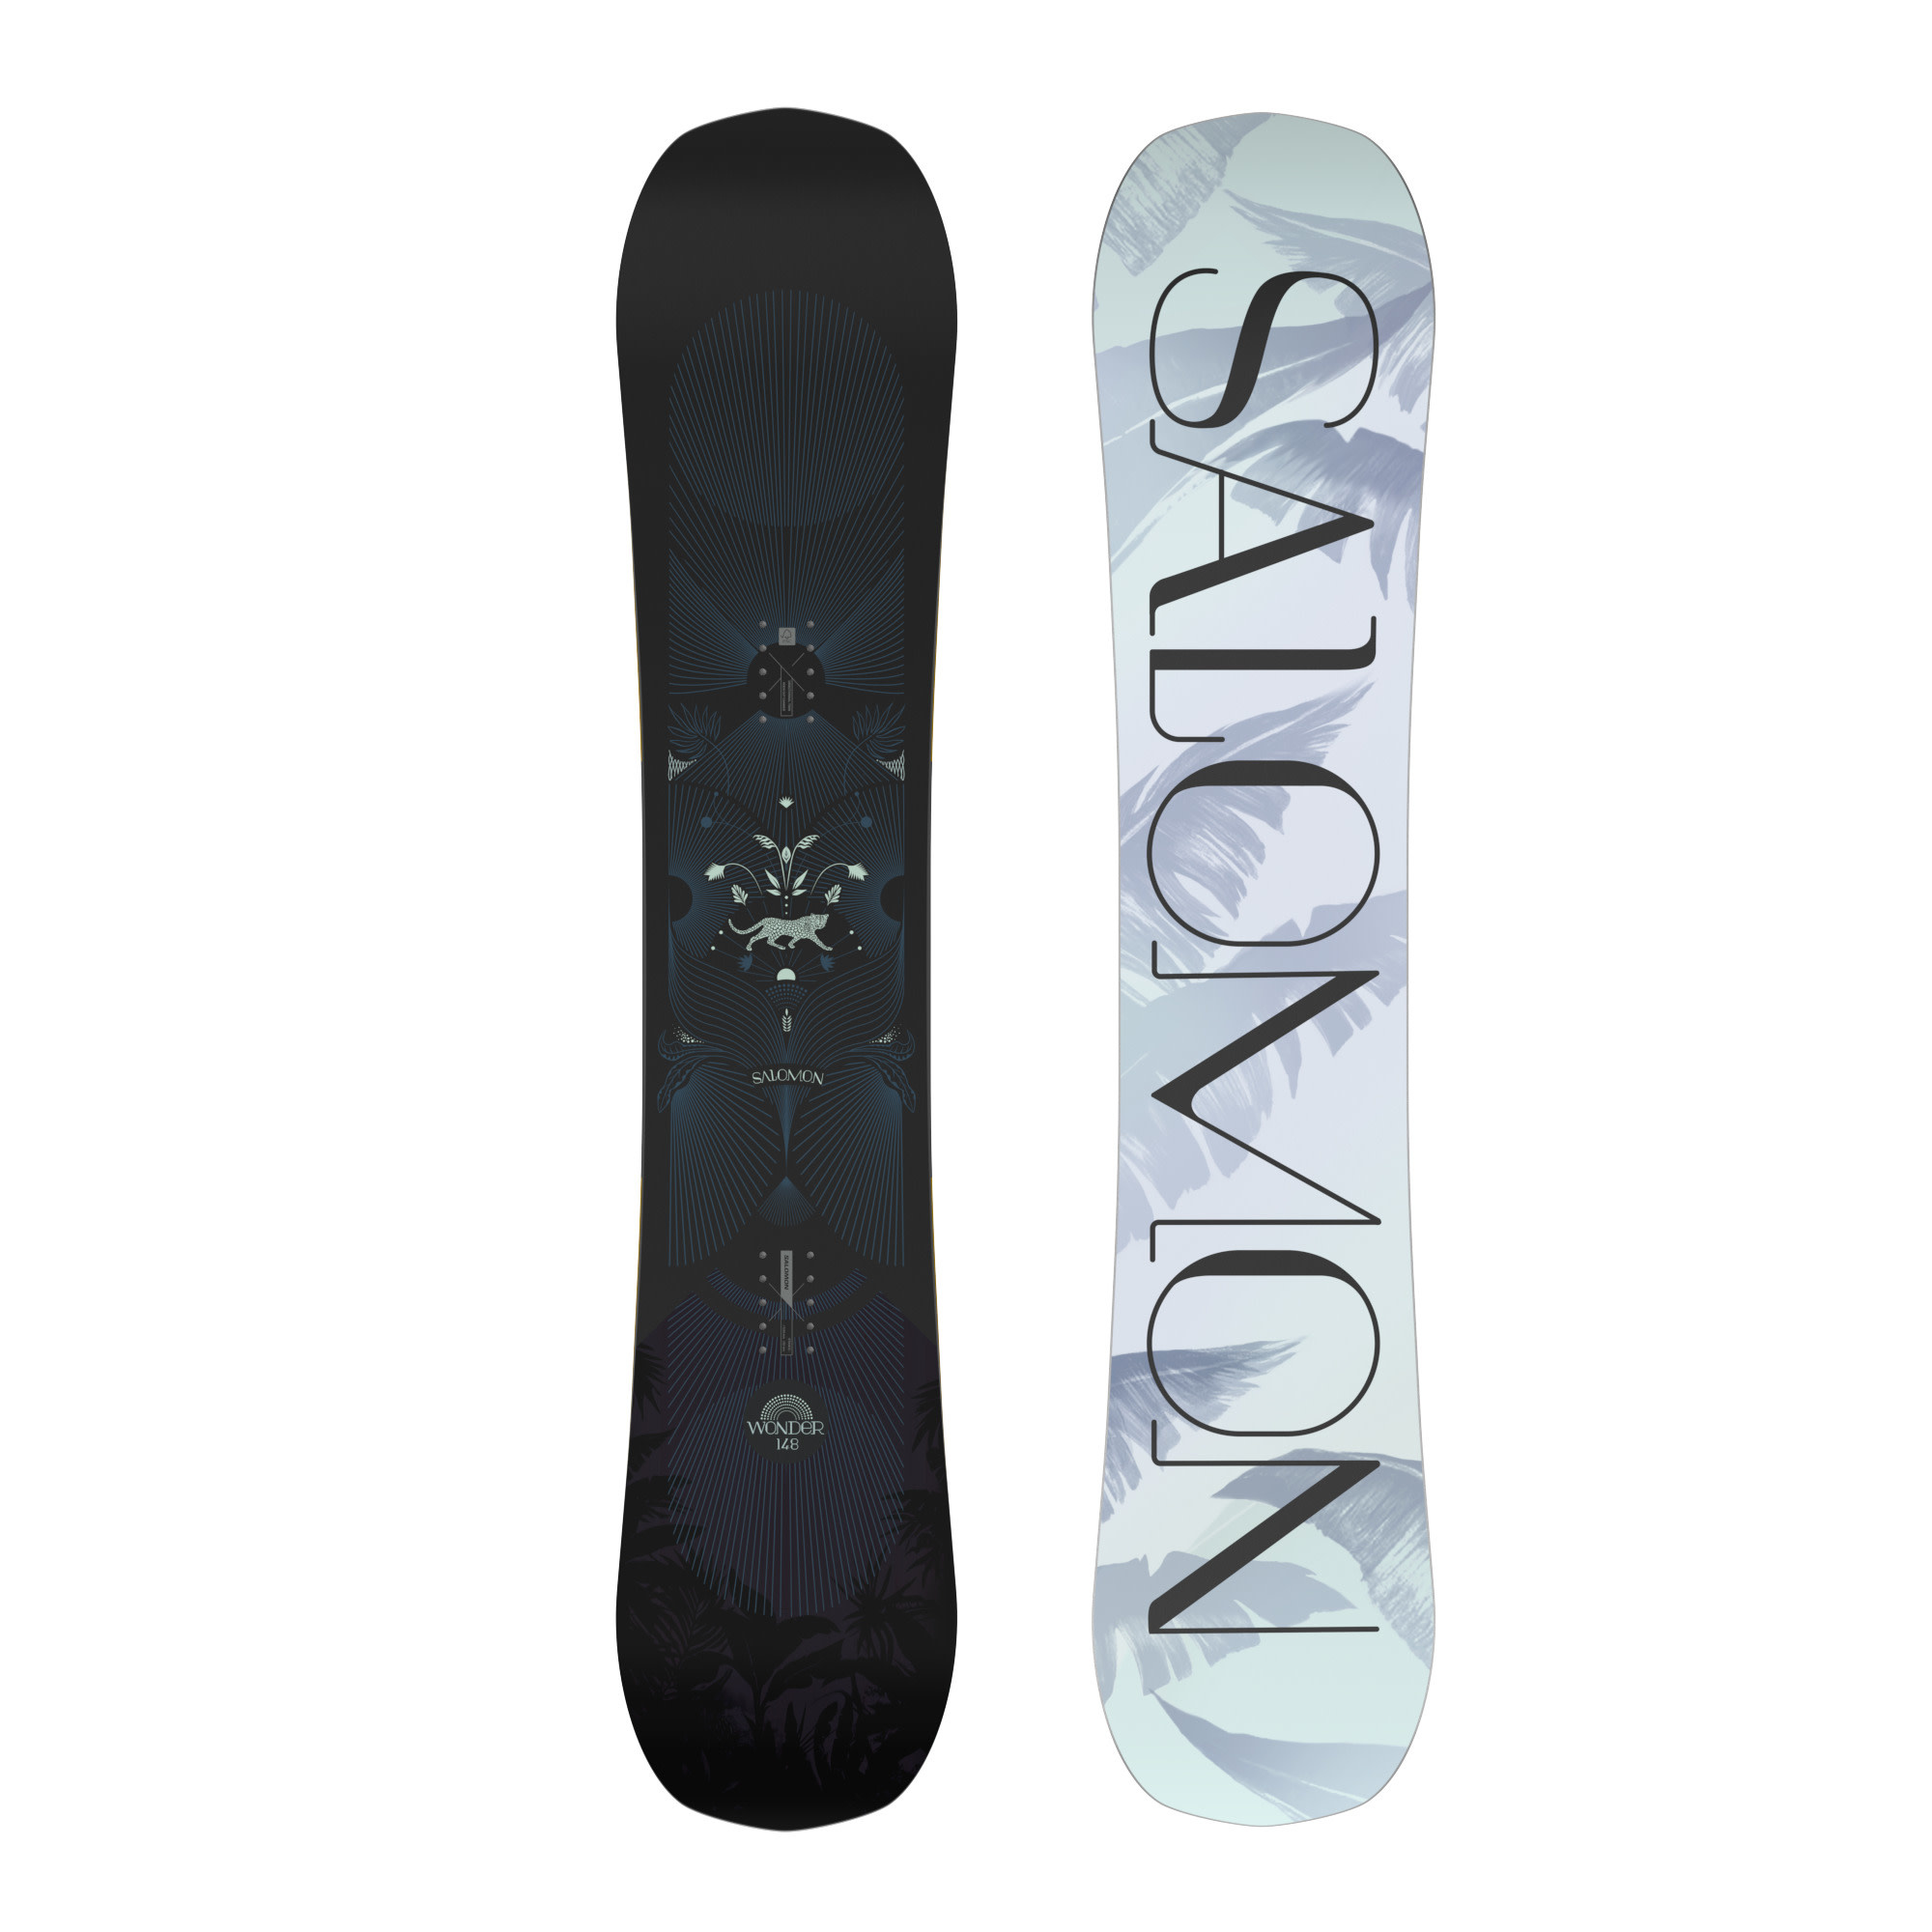 Salomon Snowboard Salomon W's Wonder Snowboard (22/23)